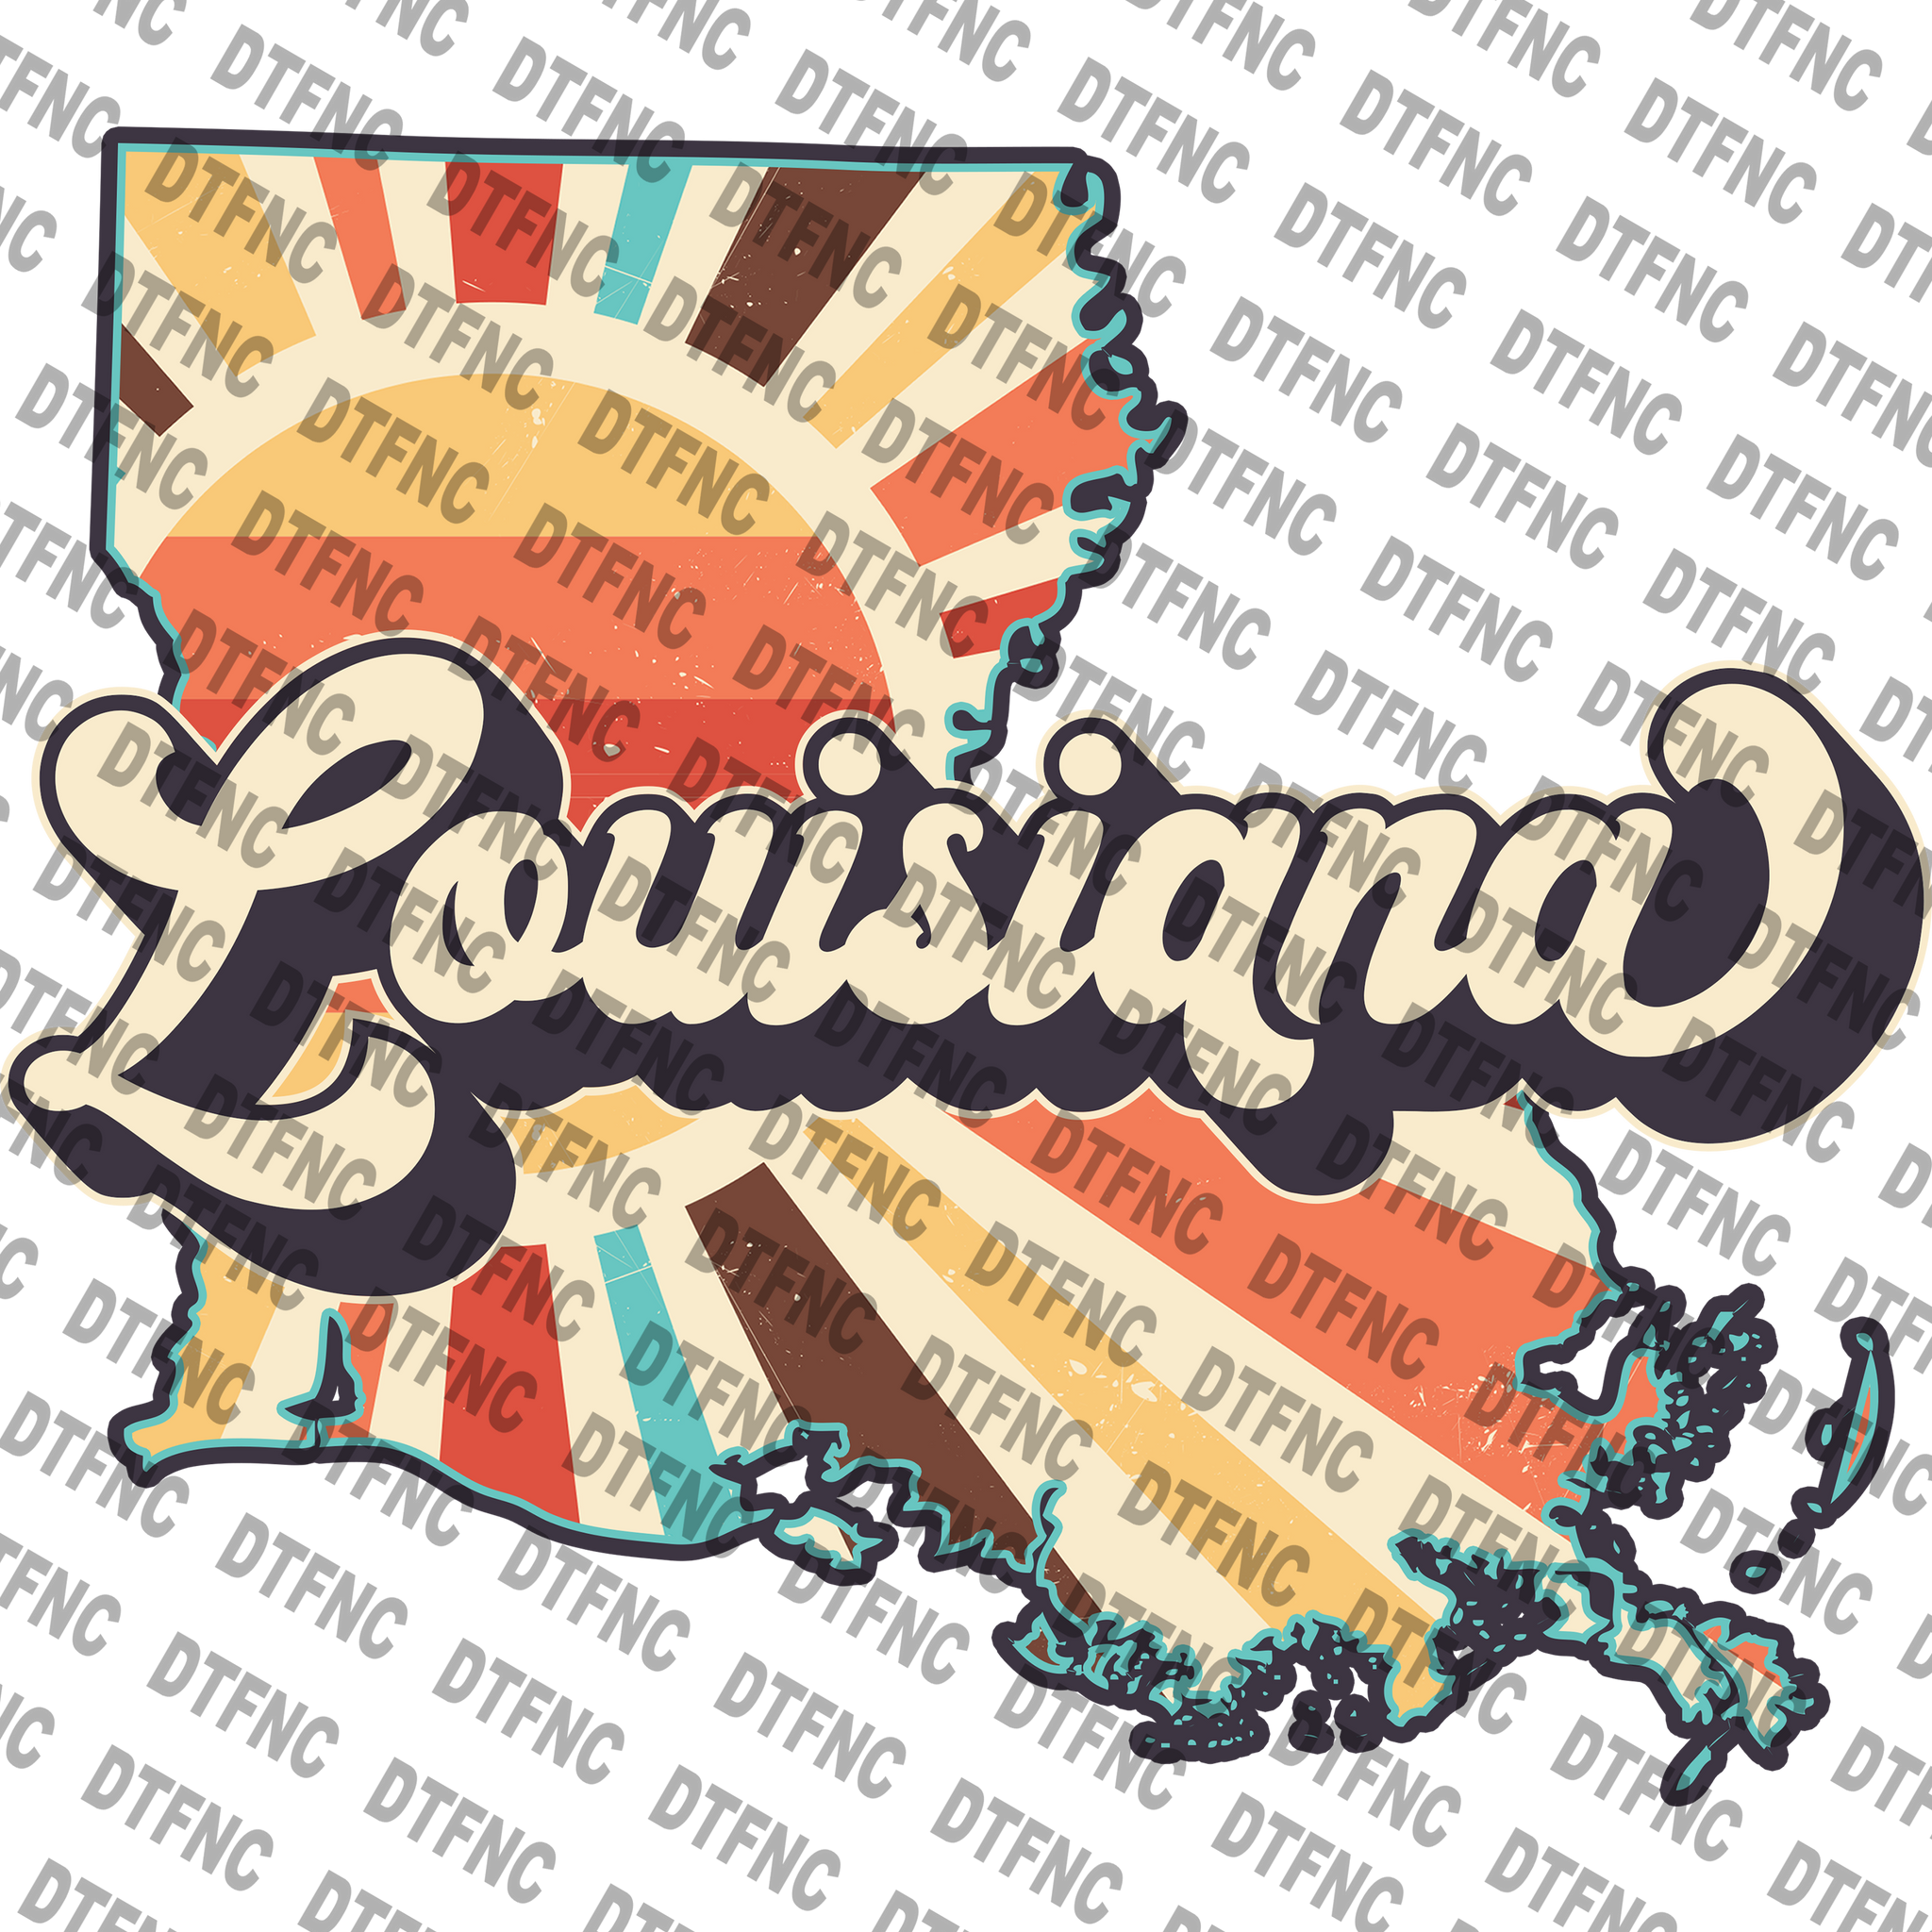 State - Louisiana